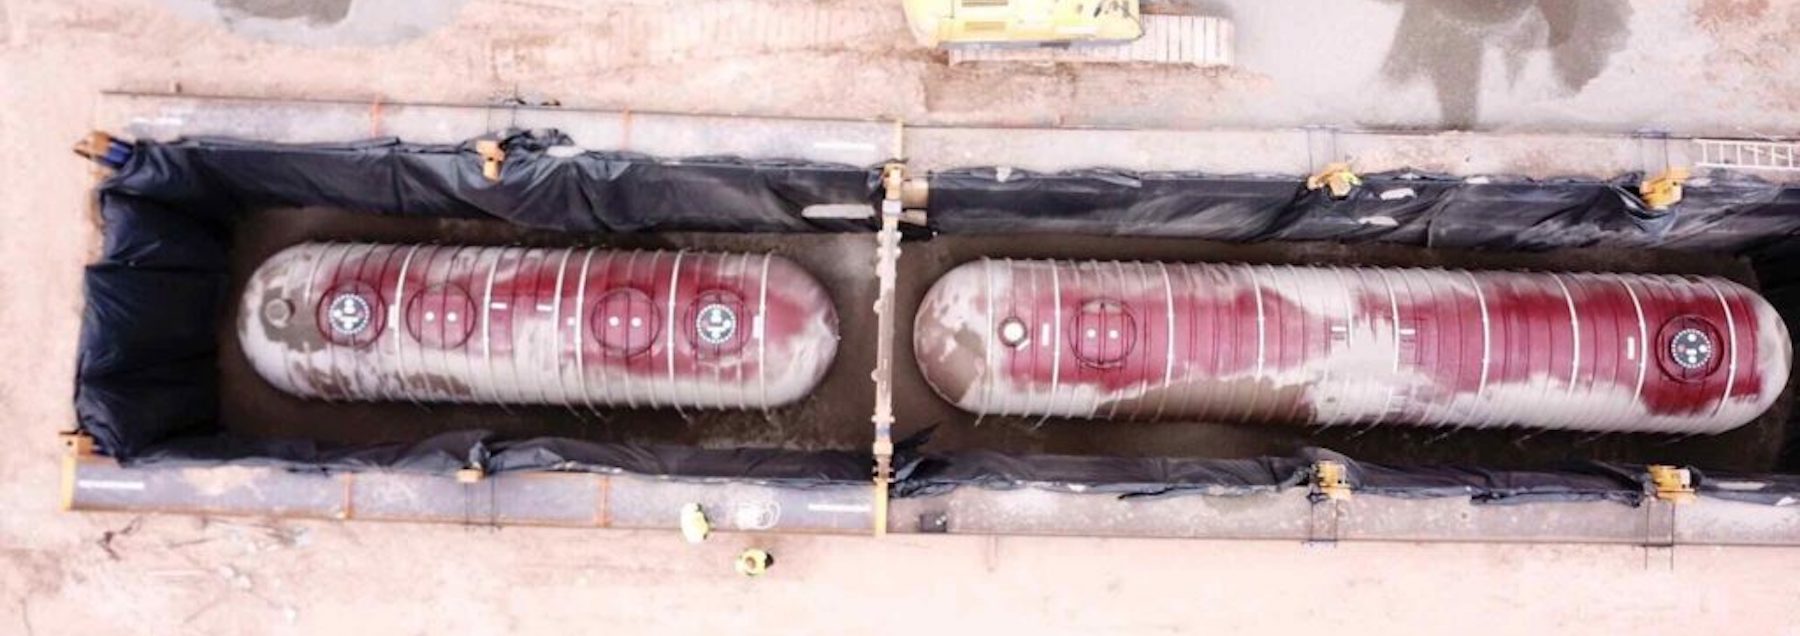 2 red gas tanks placed underground.